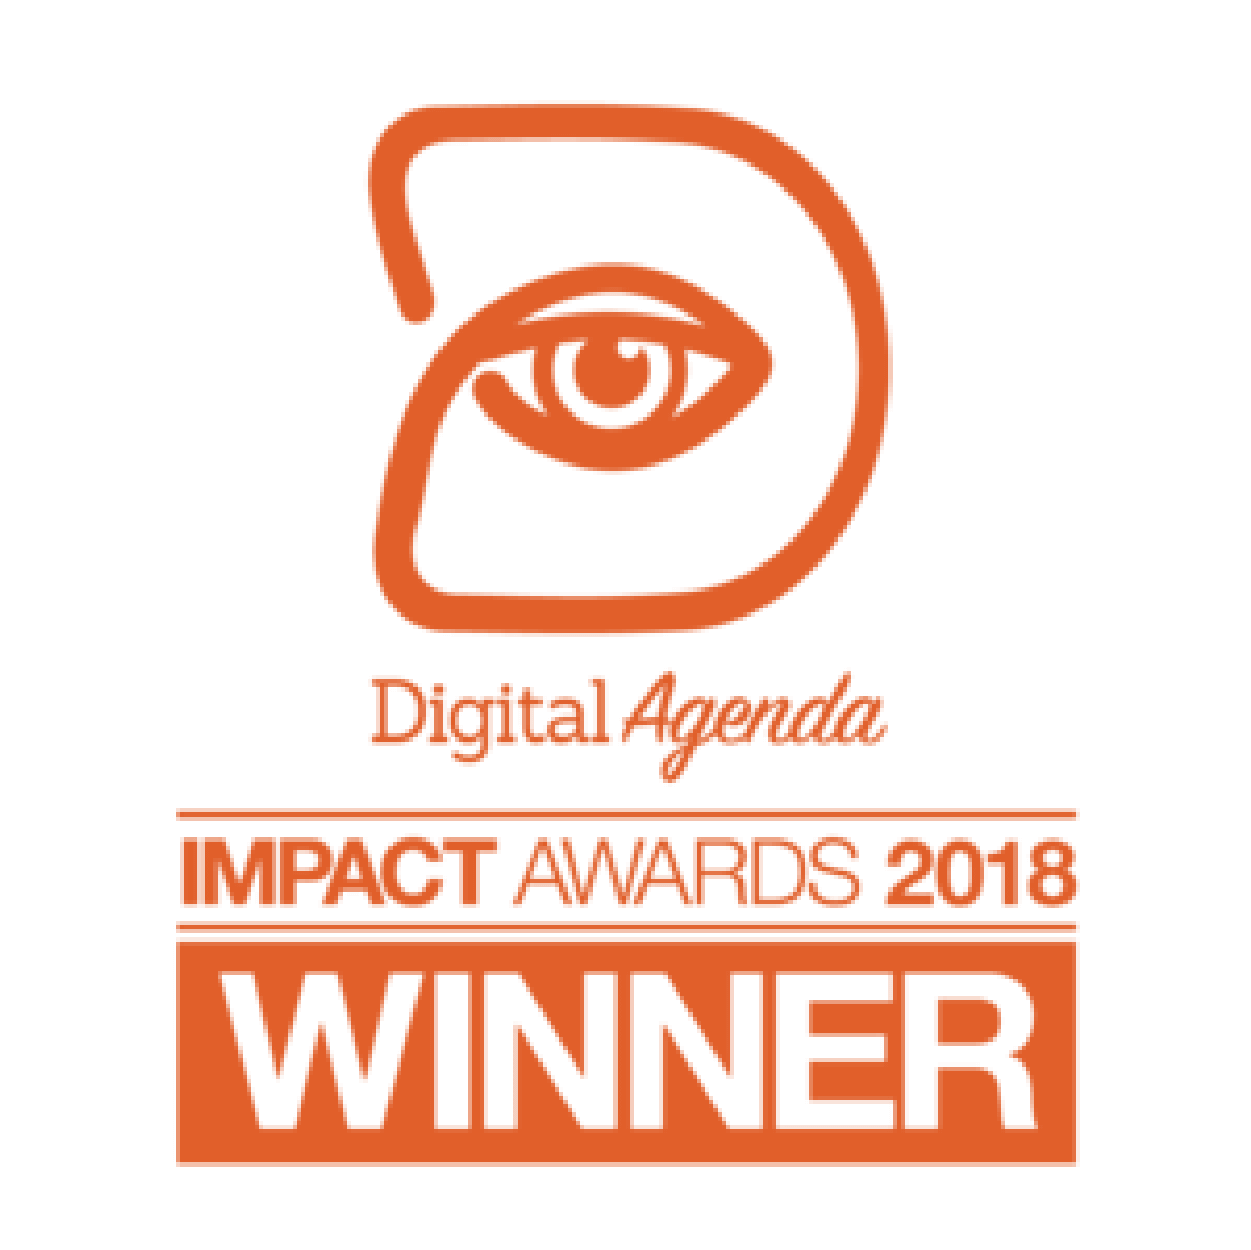 Digital agenda impact awards 2018 winner badge